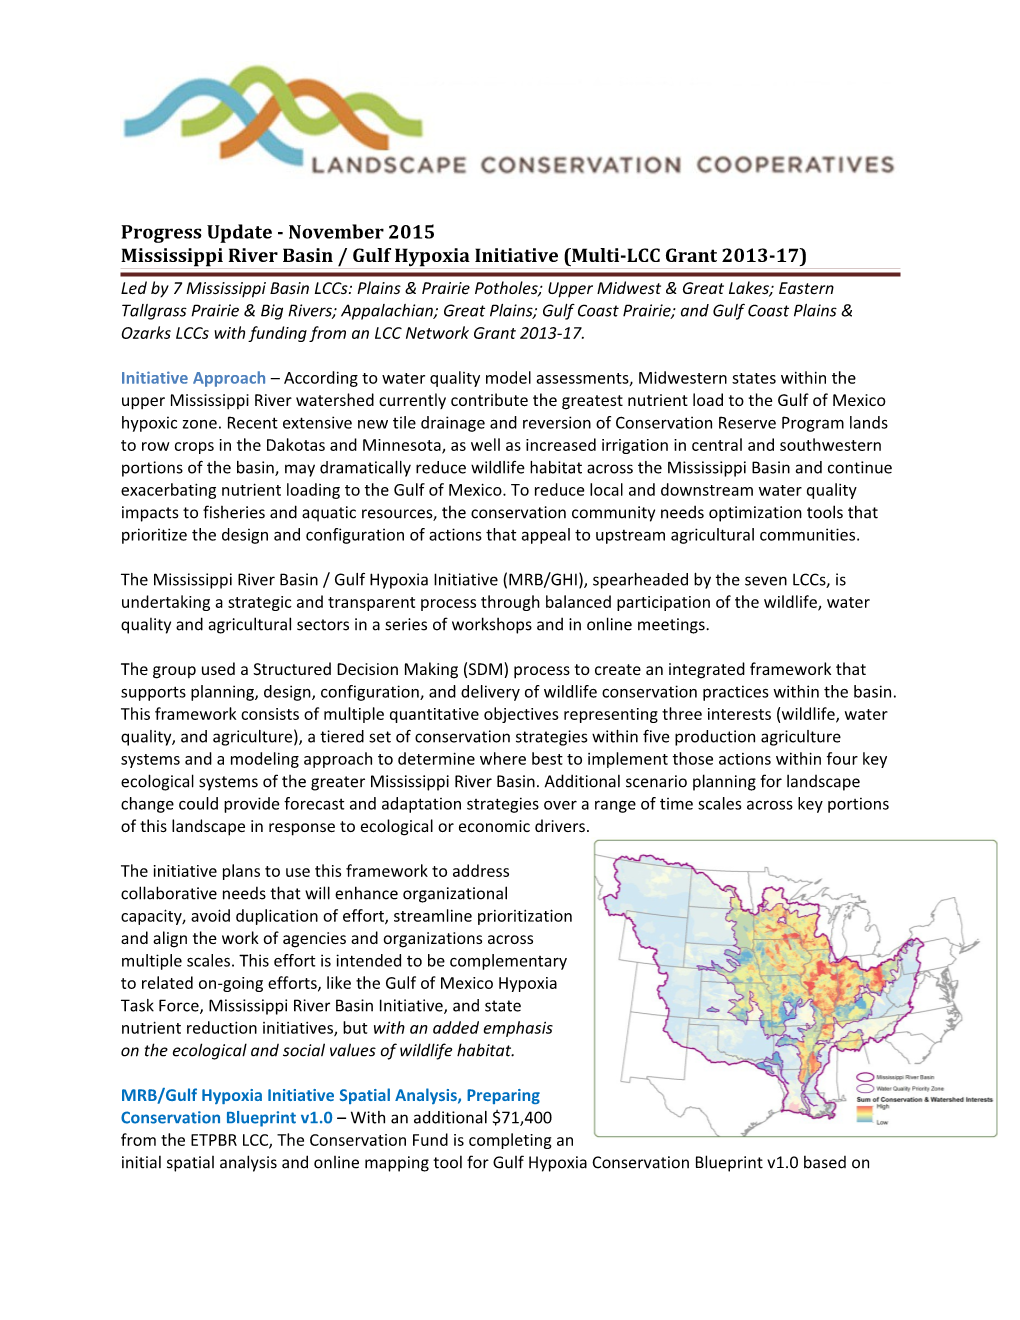 Progress Update - November 2015 Mississippi River Basin / Gulf Hypoxia Initiative (Multi-LCC